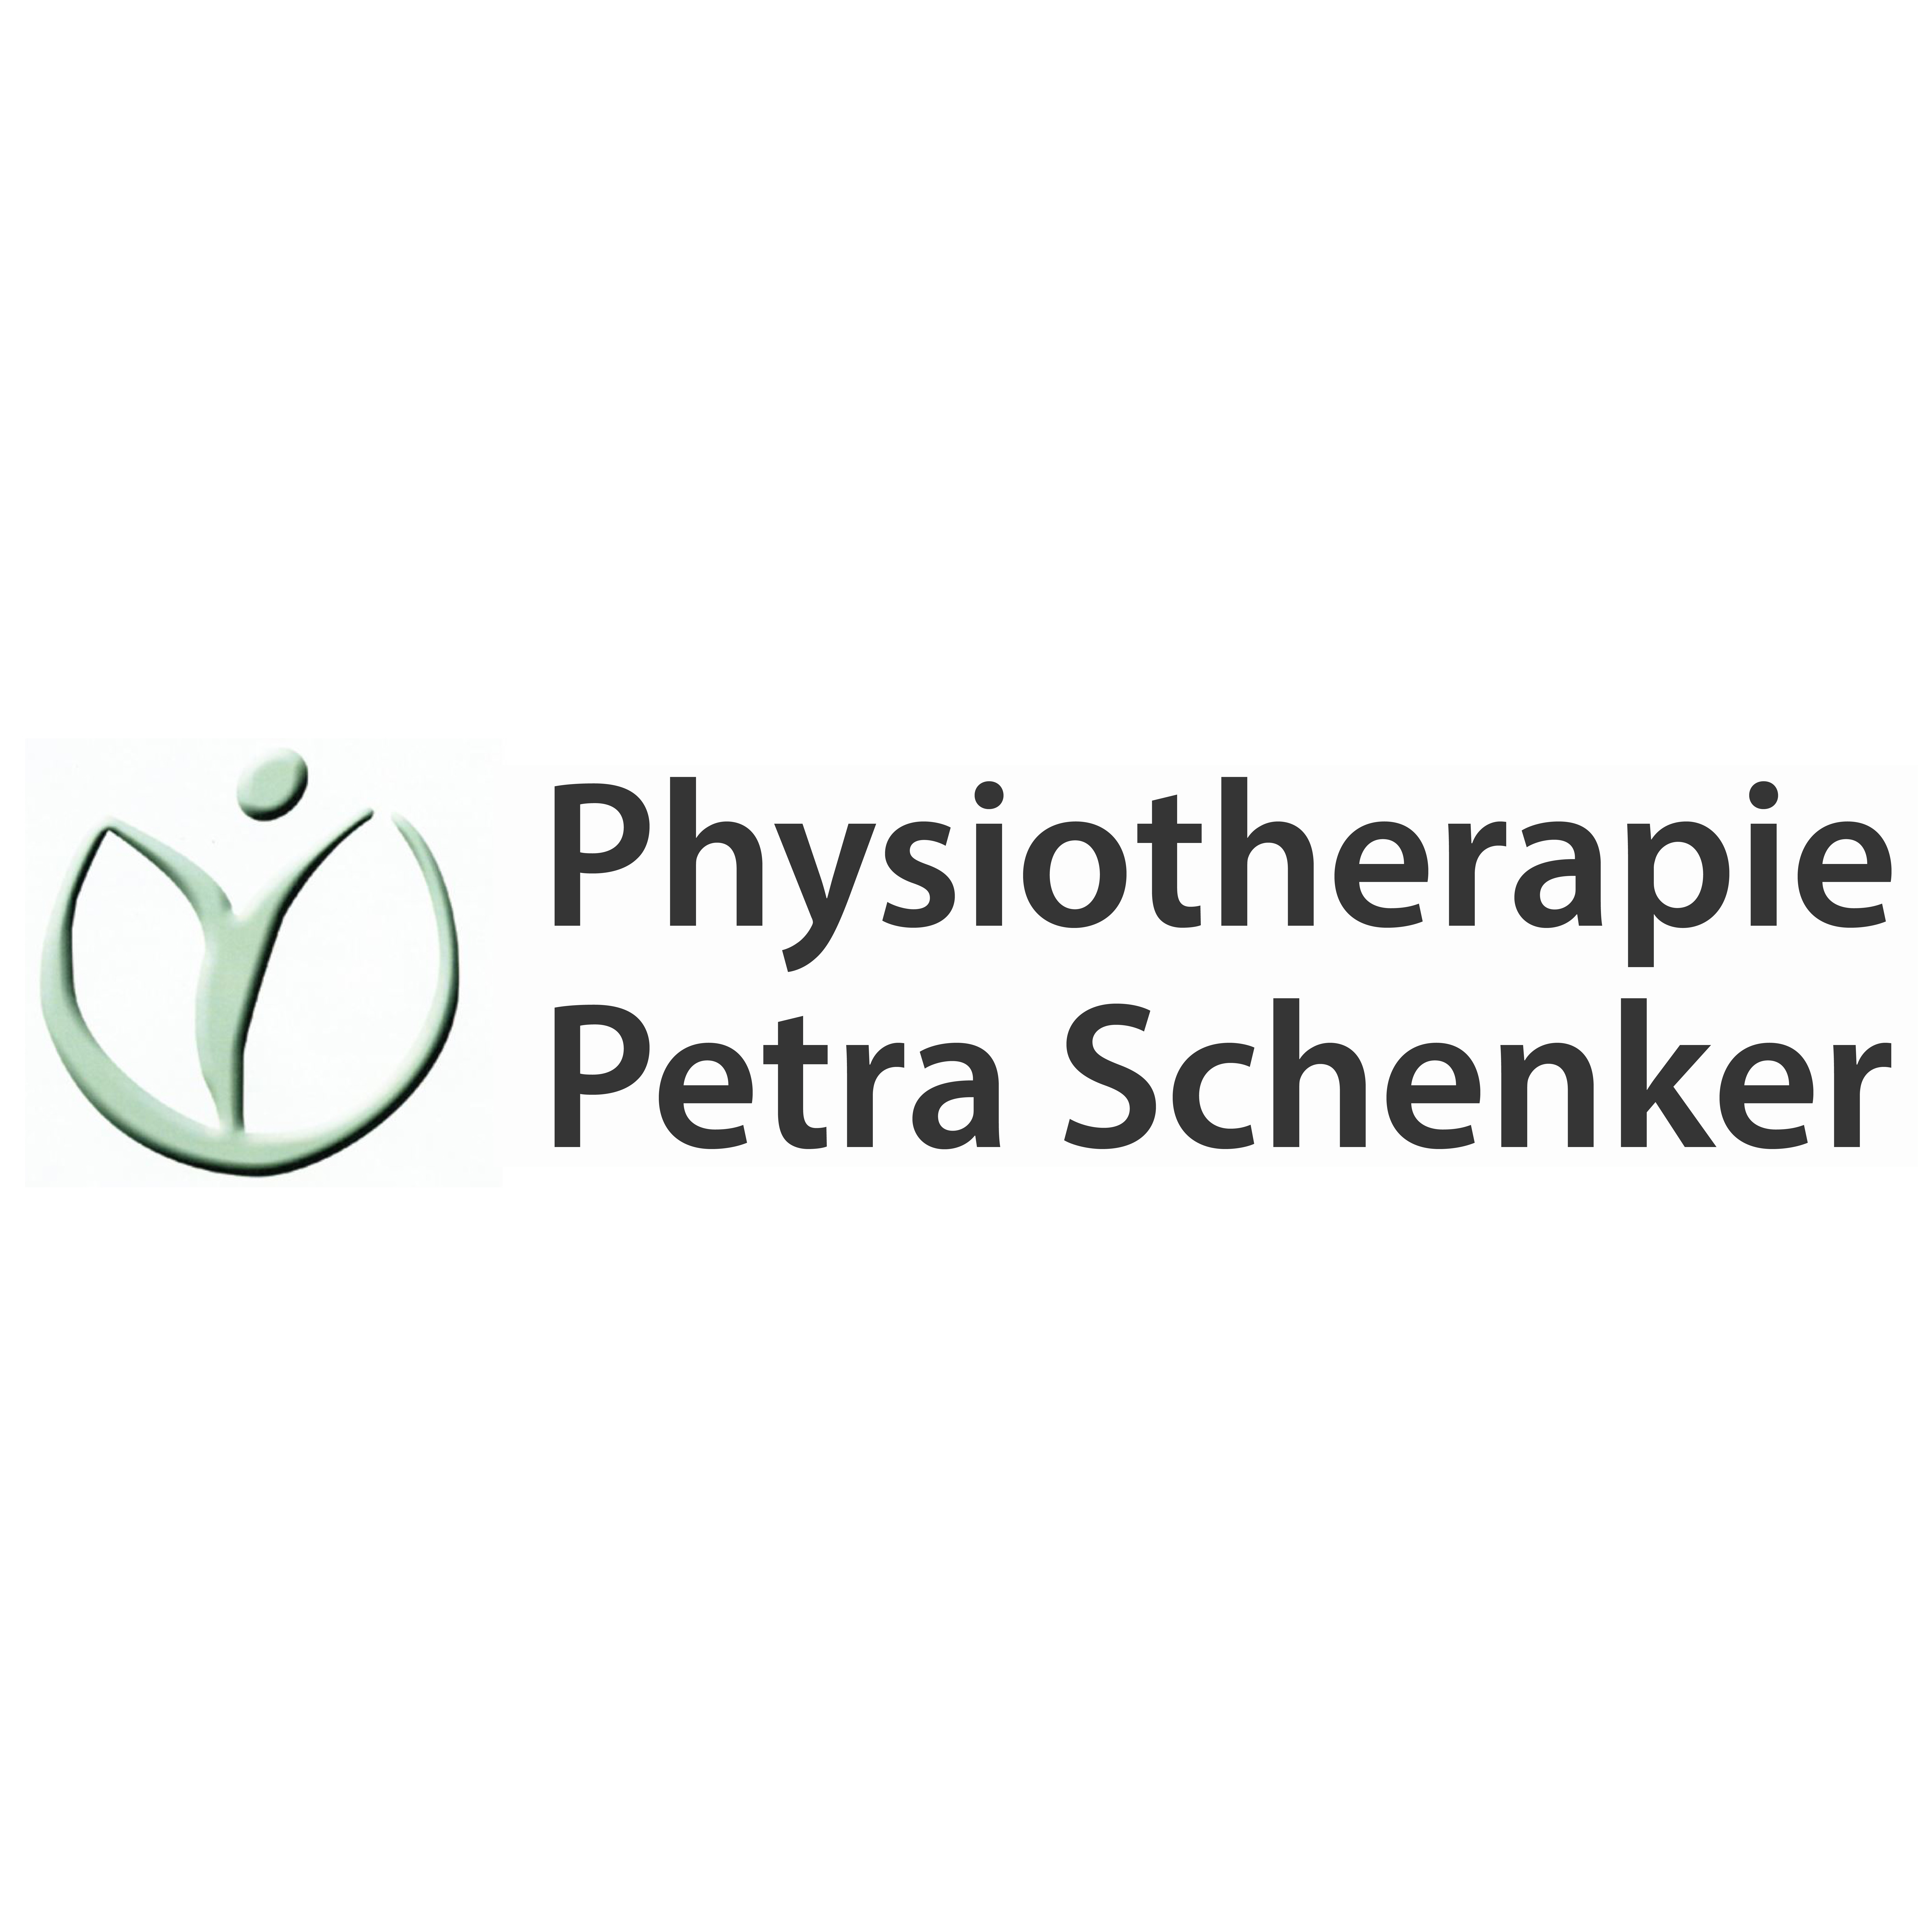 Physiotherapie Petra Schenker in Zeulenroda Triebes - Logo